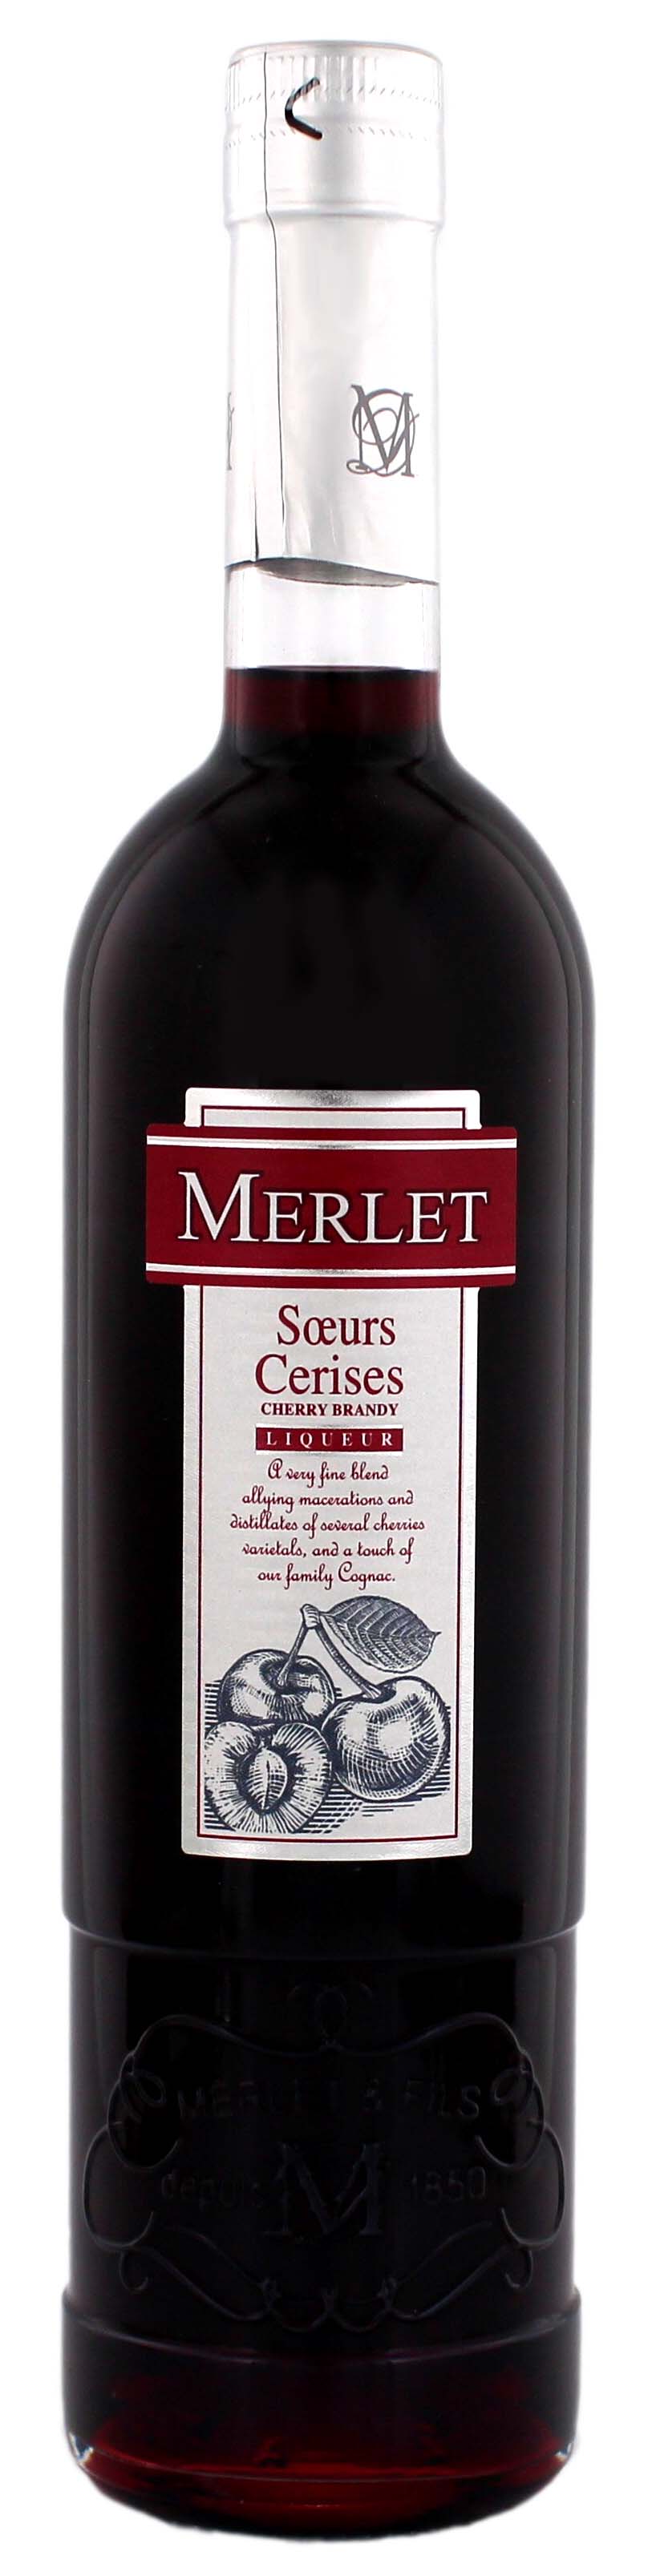 Merlet Soeurs Cerises Cherry Liqueur kaufen Drinkology im Online Shop ! Brandy